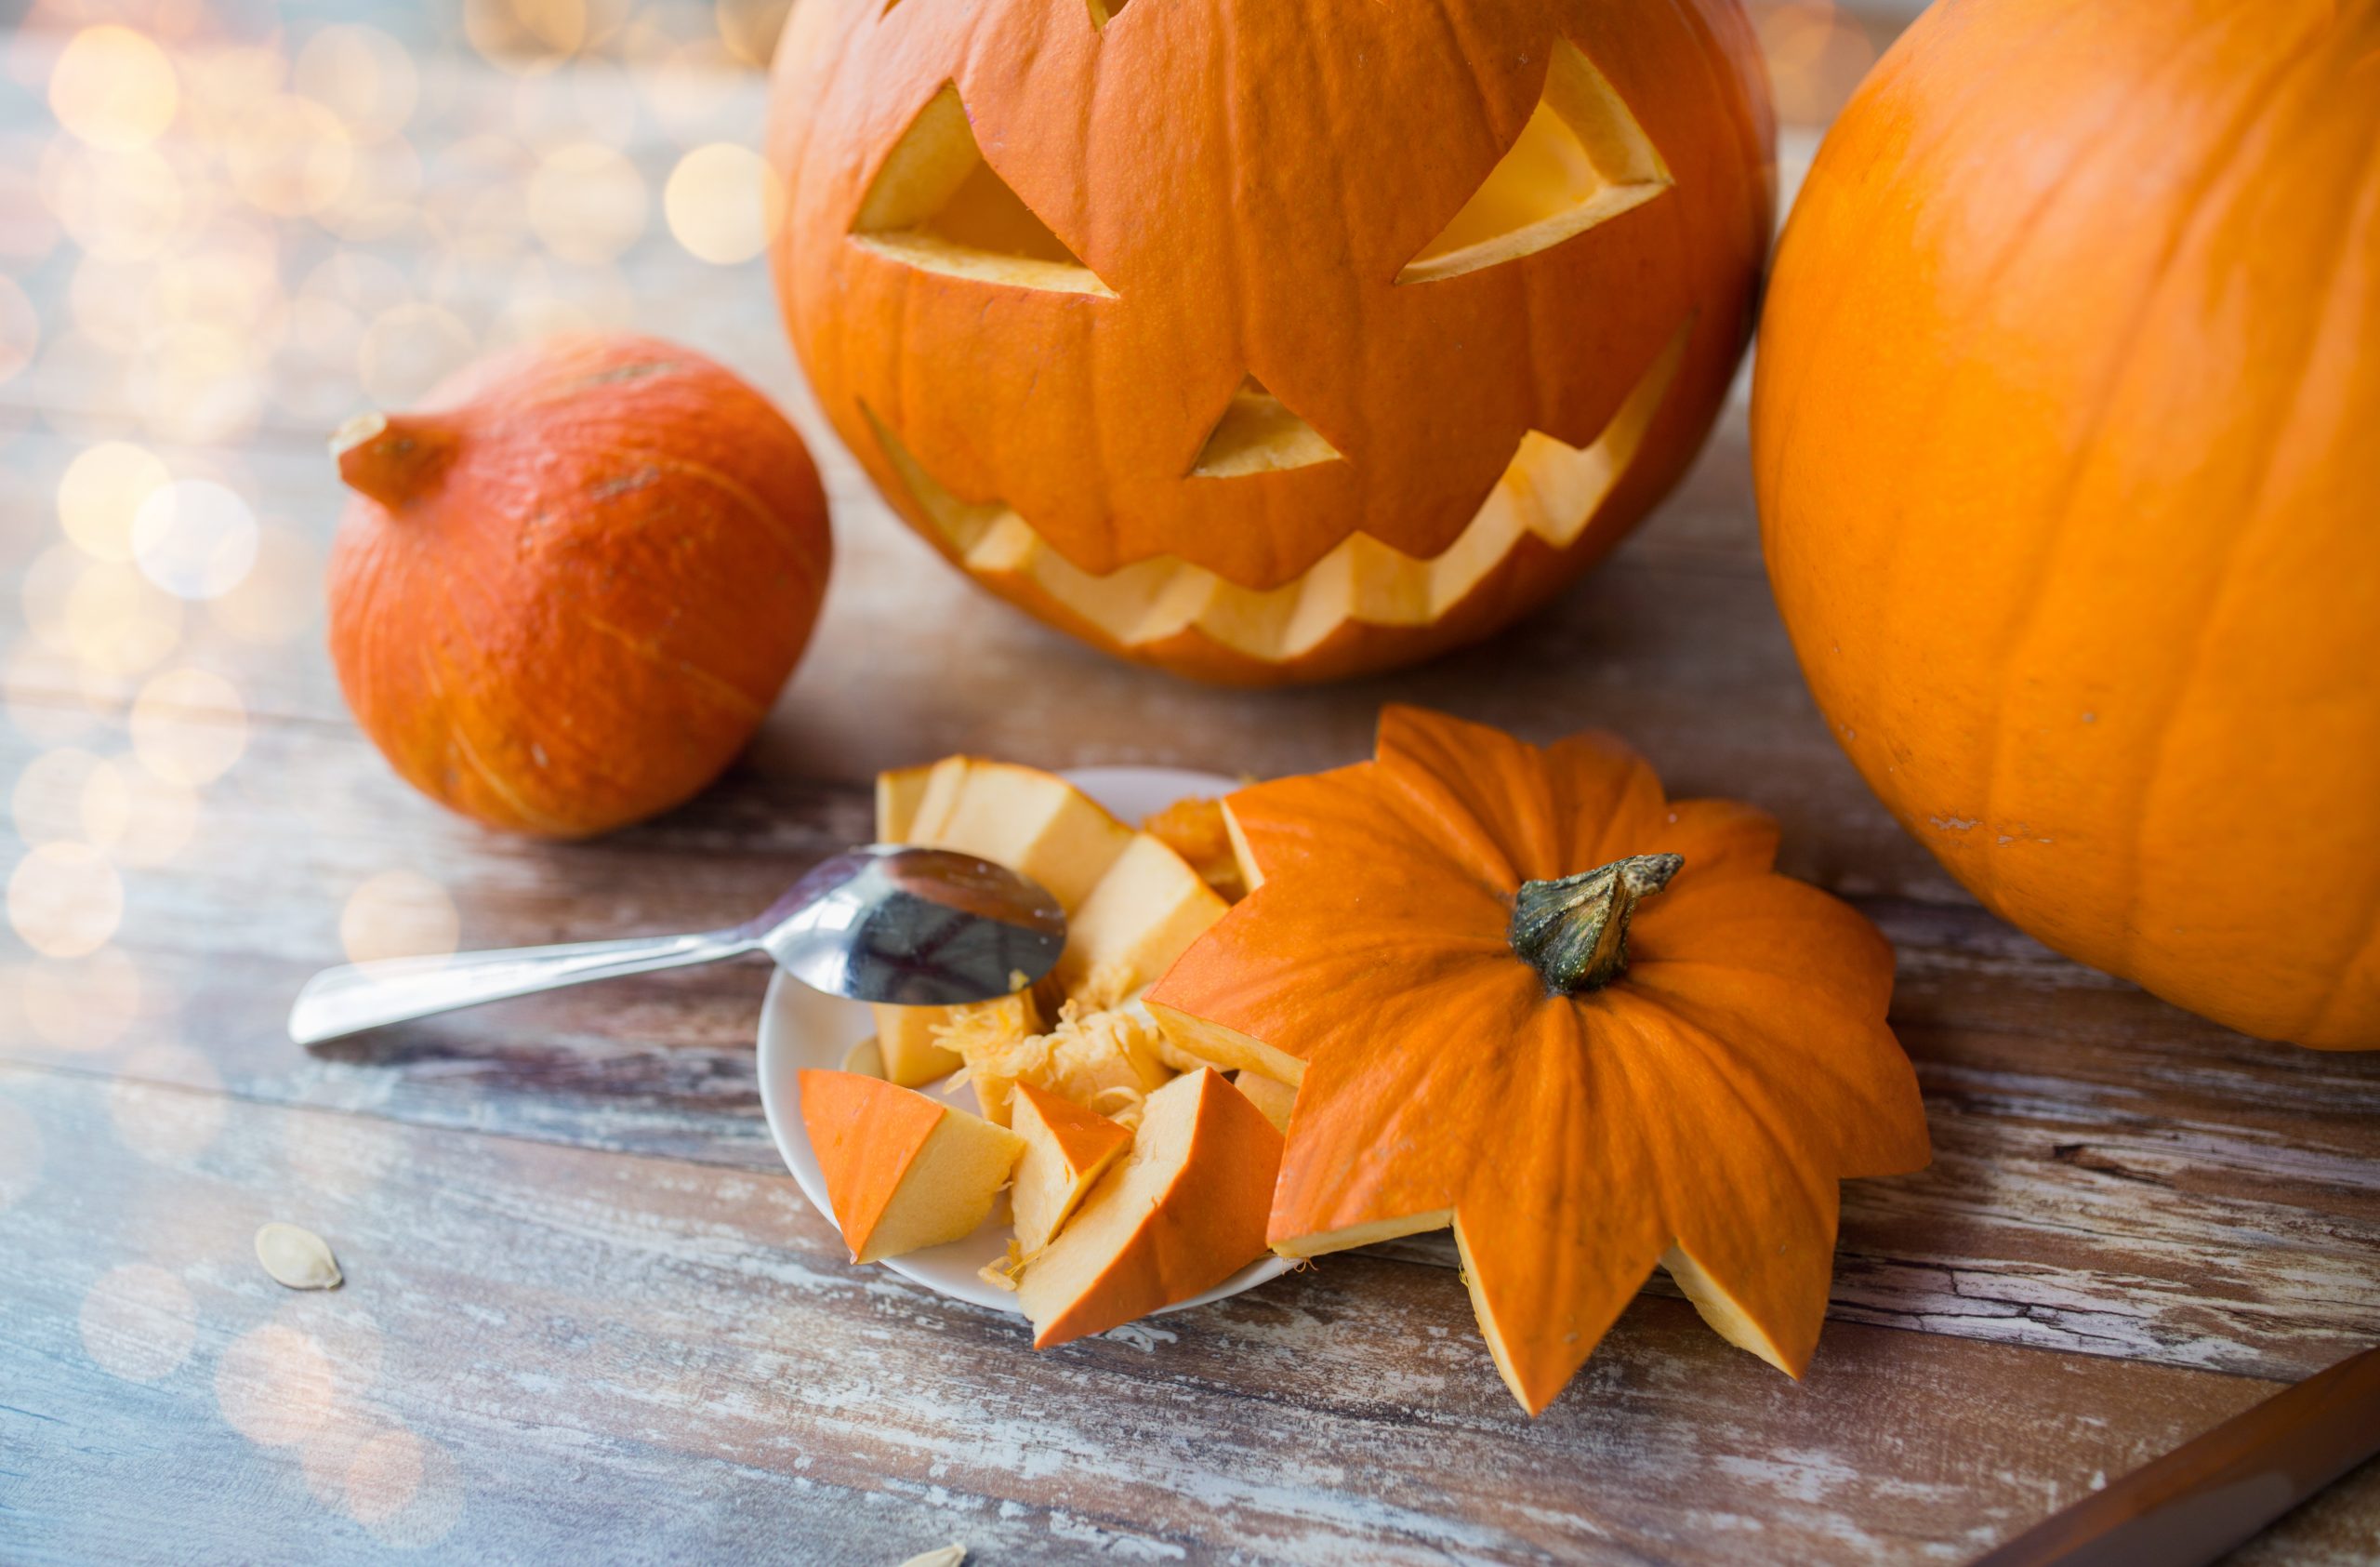 How to make a pumpkin for Halloween?